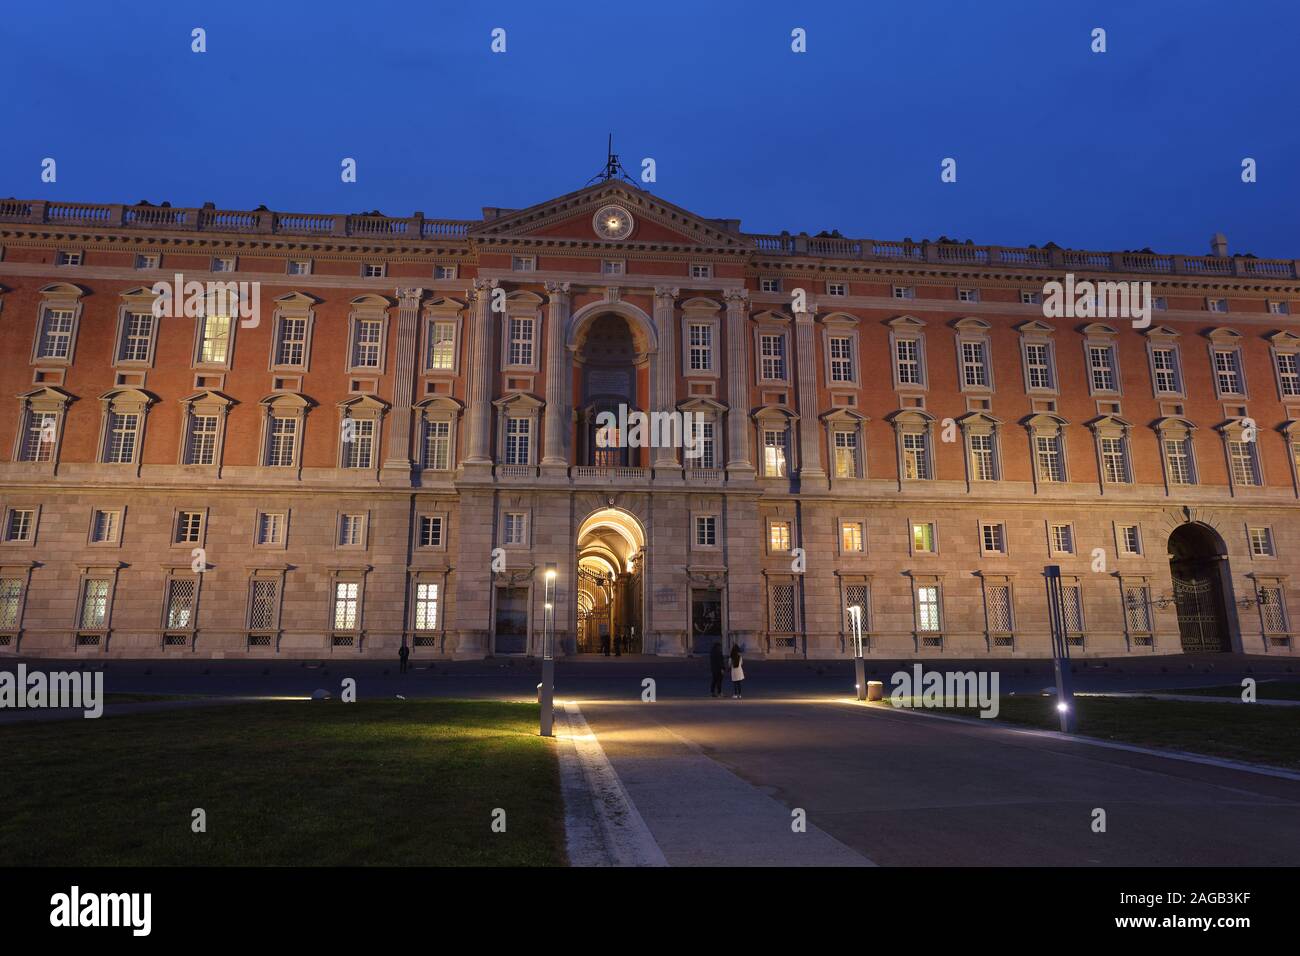 Caserta, Italy - december 18, 2019: The Royal Palace of Caserta at night Stock Photo